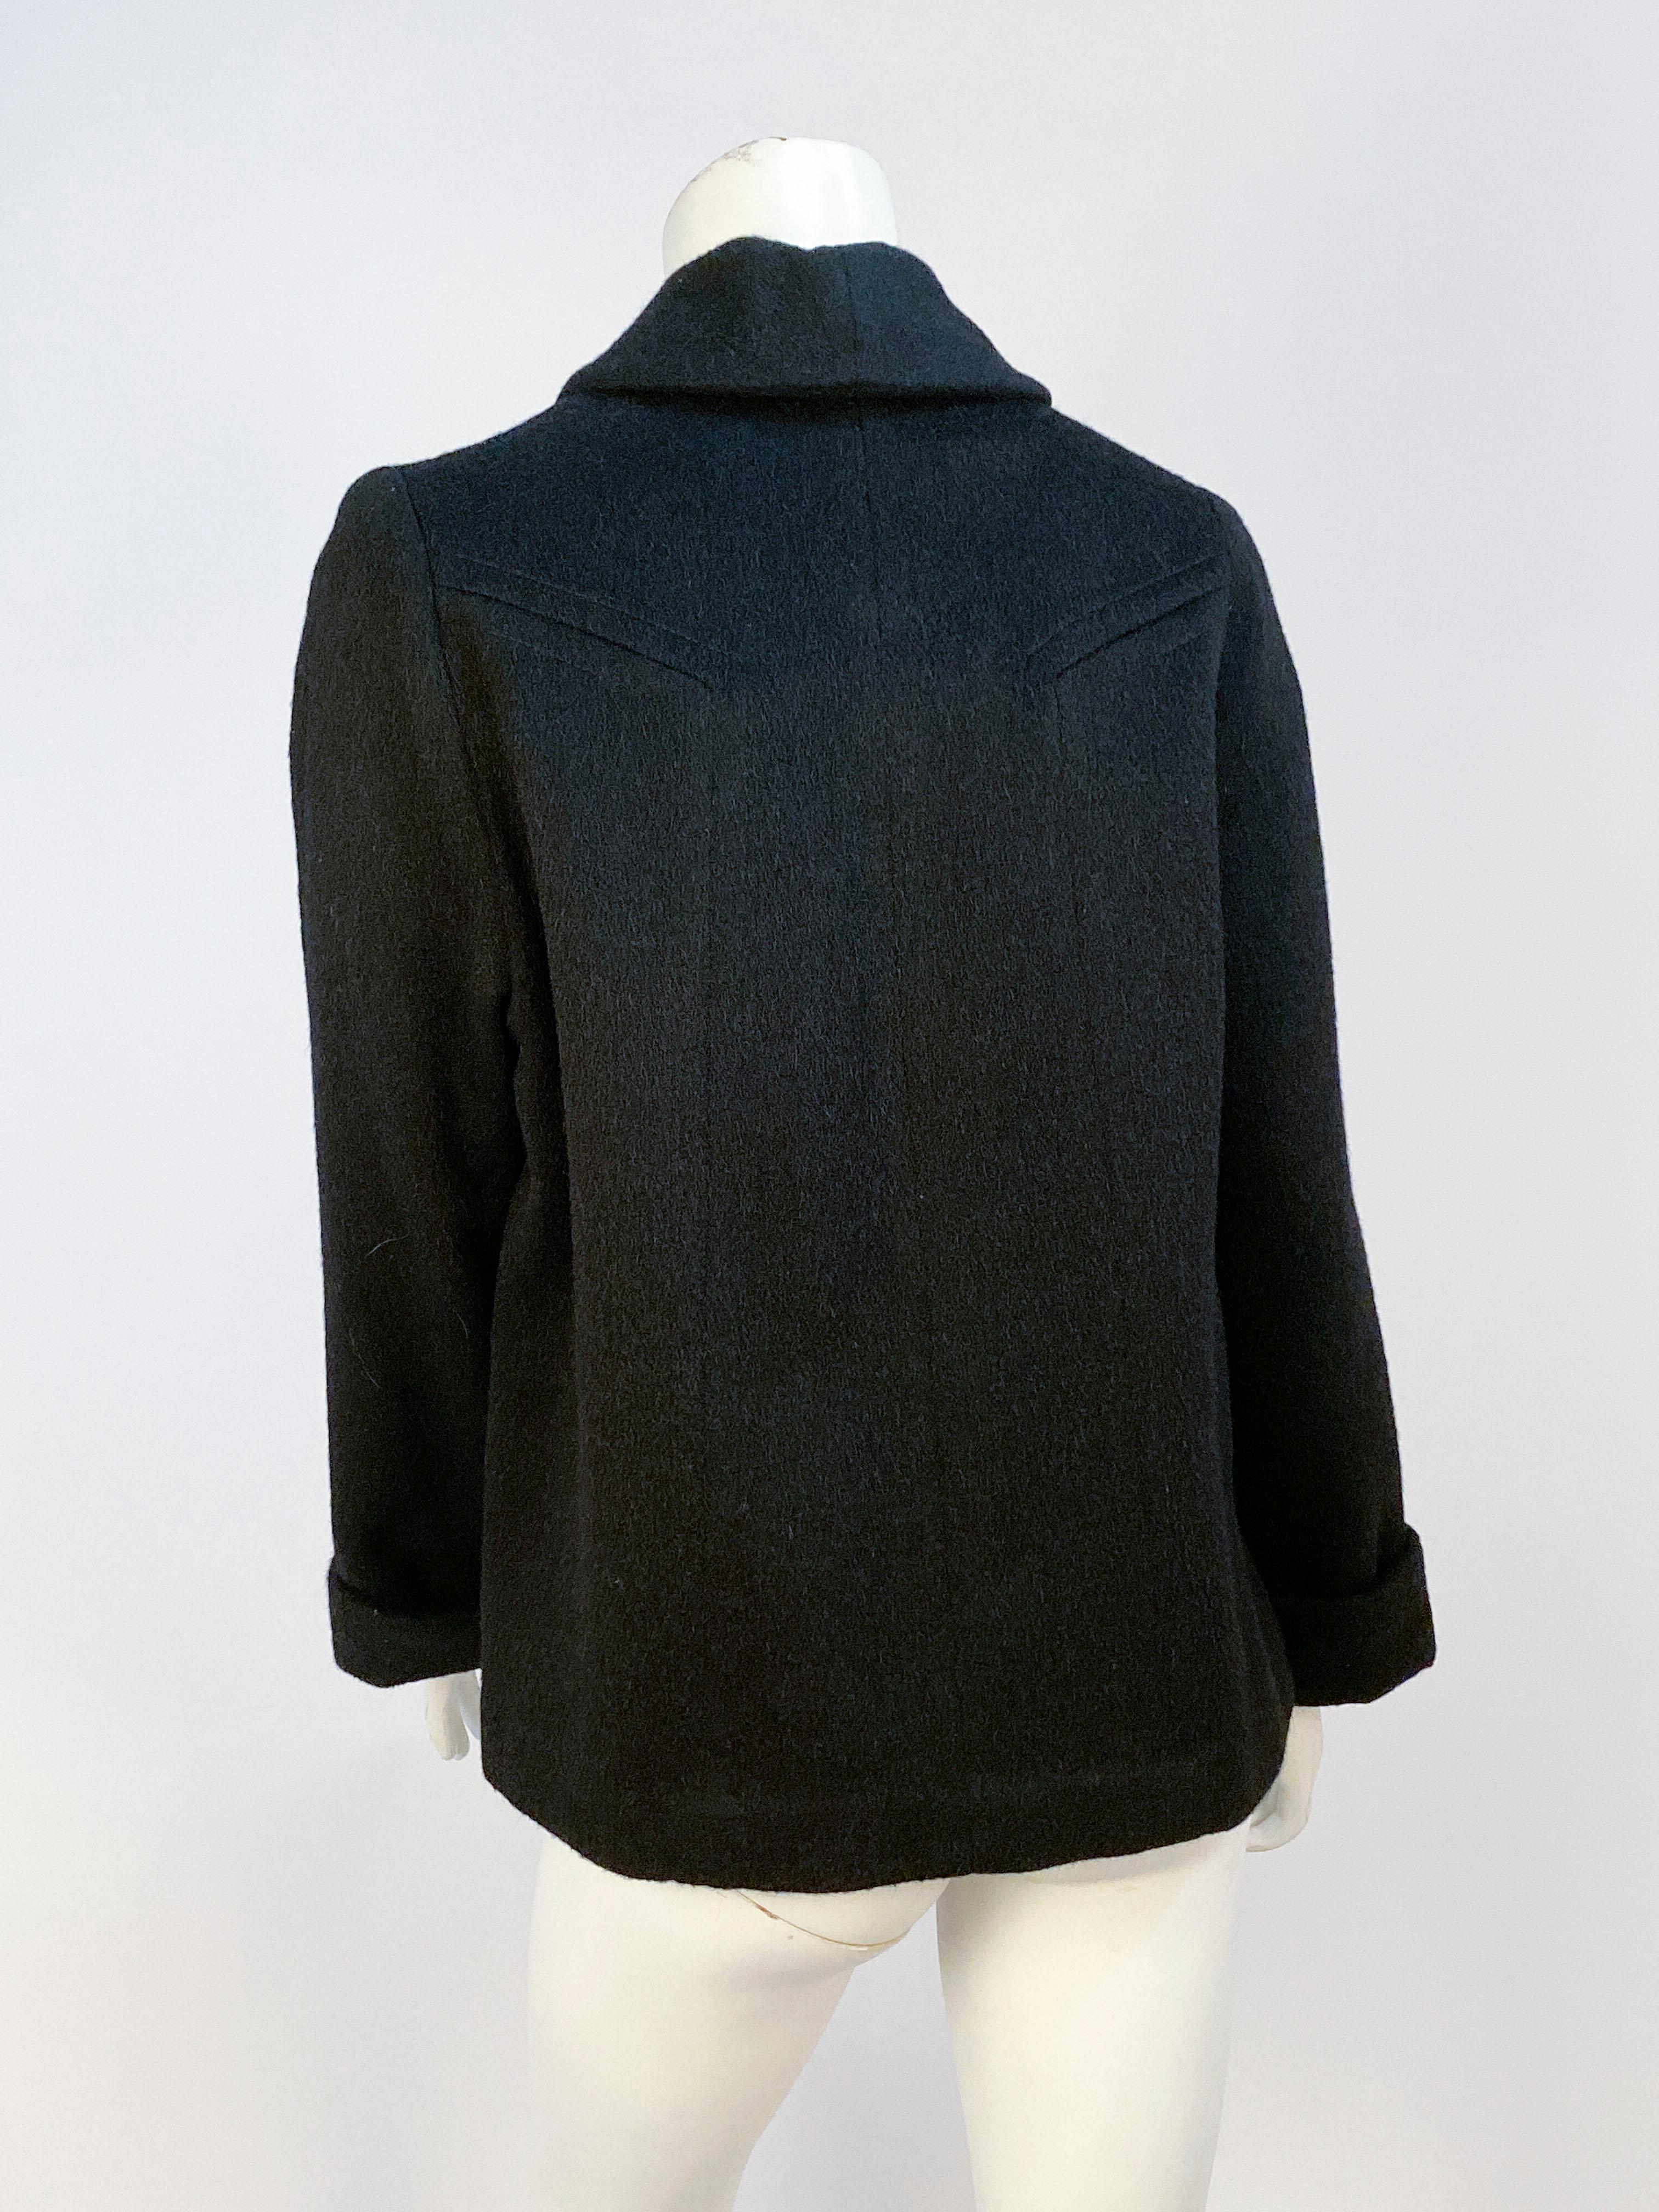 1950s Black Wool Jacket  For Sale 1